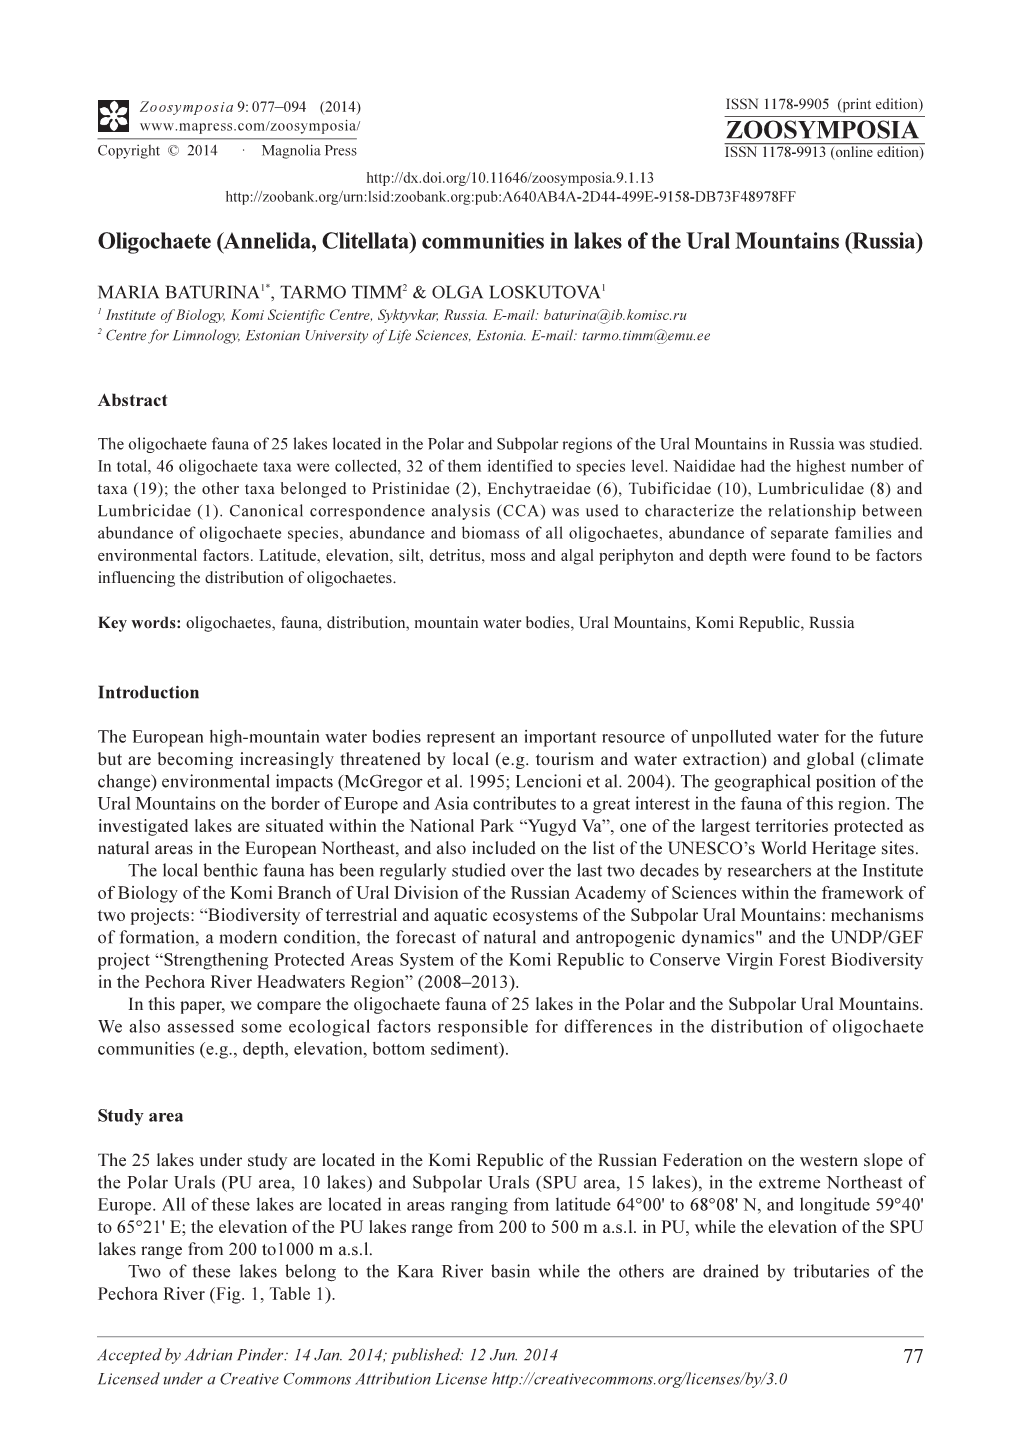 Oligochaete (Annelida, Clitellata) Сommunities in Lakes of the Ural Mountains (Russia)